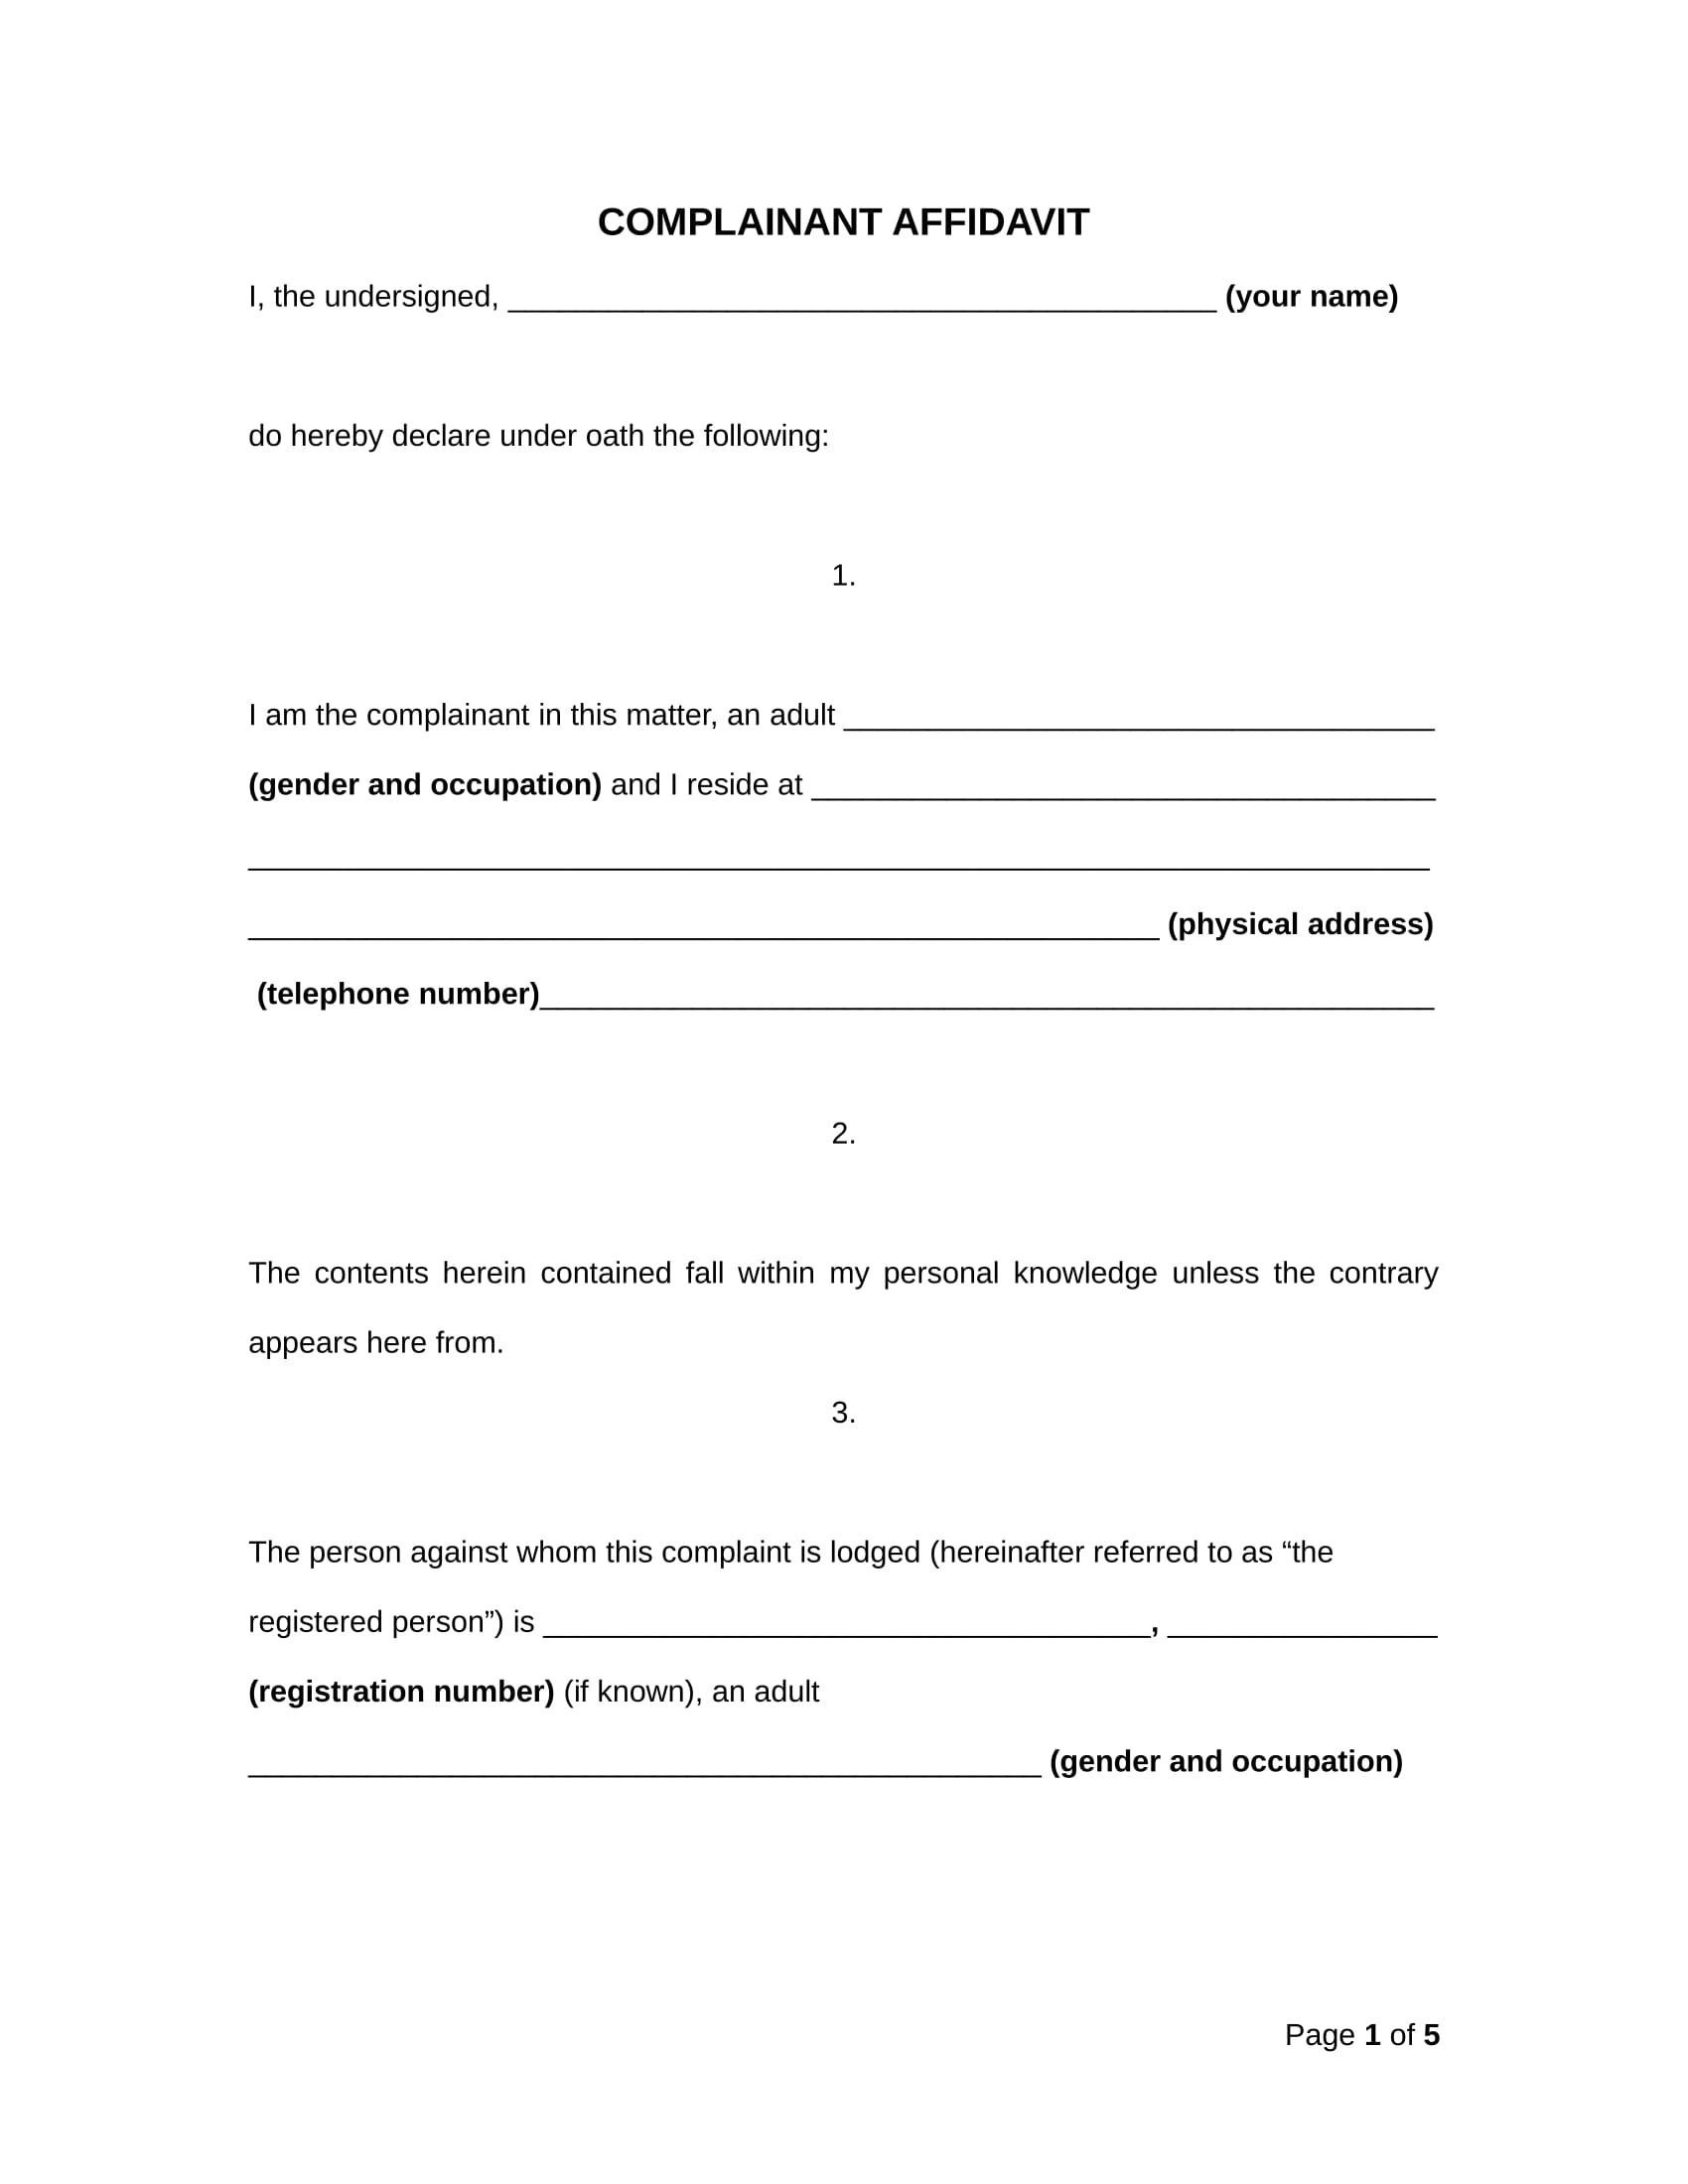 complainant affidavit sample format 1